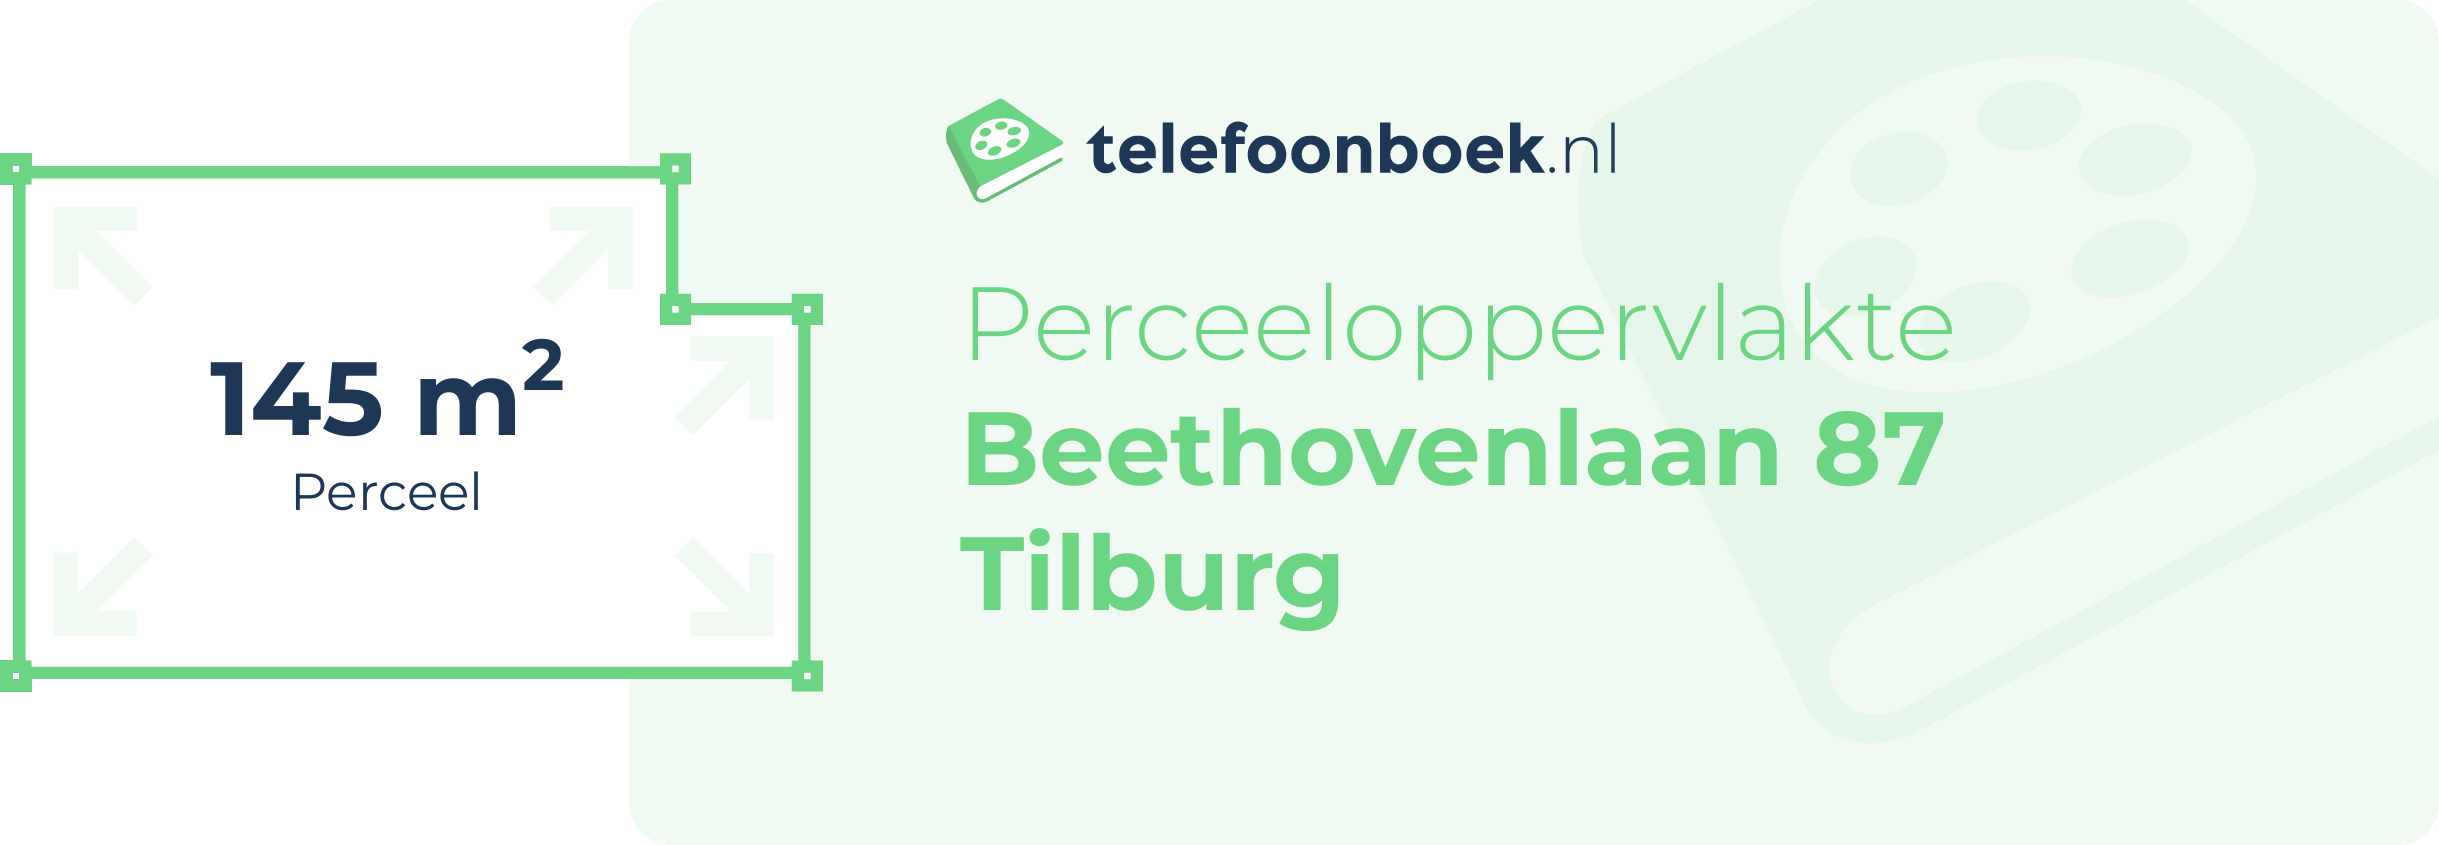 Perceeloppervlakte Beethovenlaan 87 Tilburg